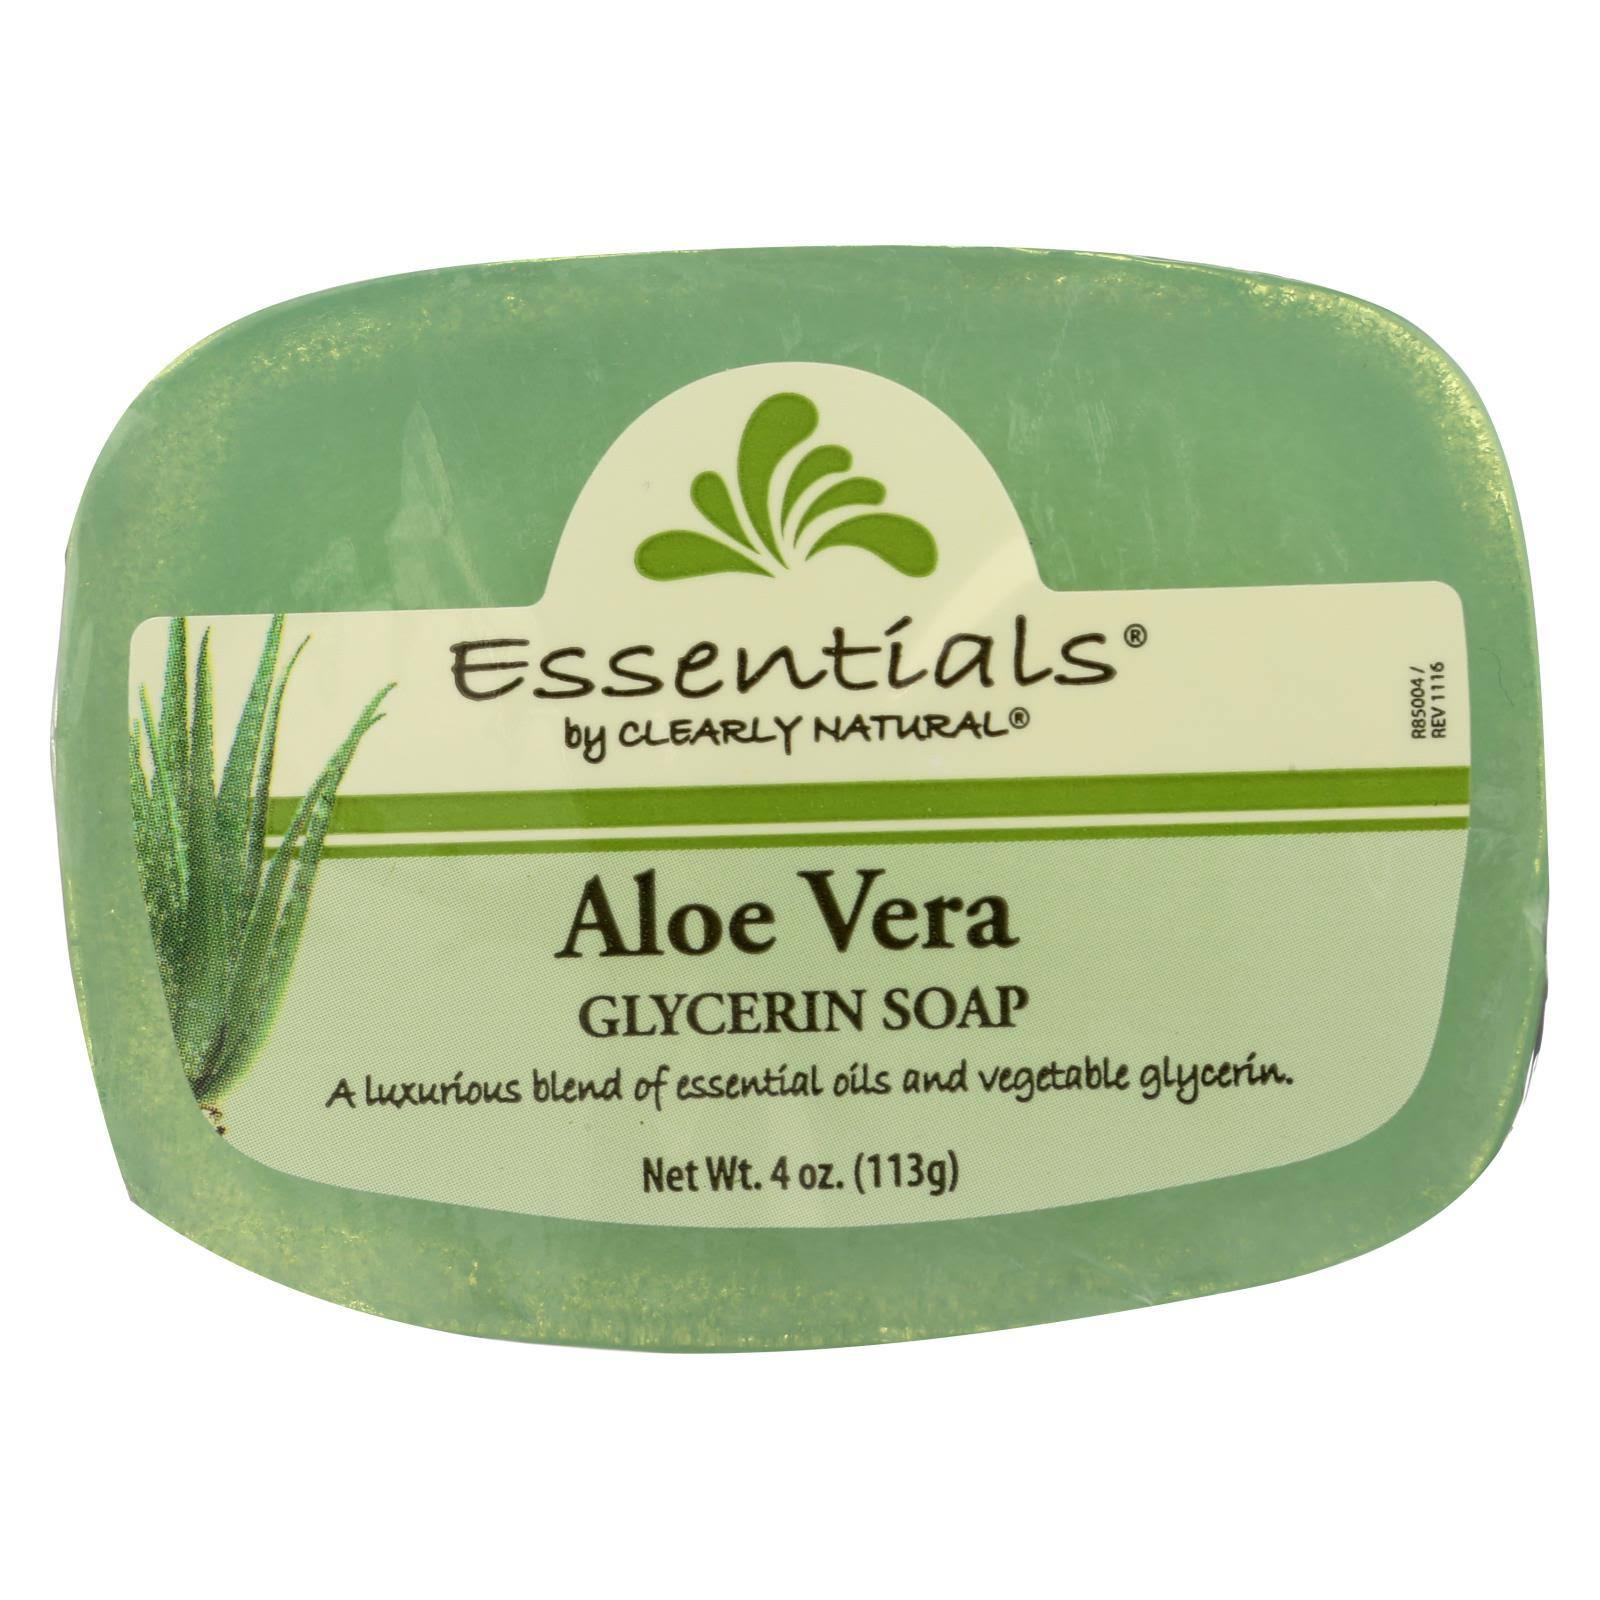 Clearly Natural Glycerine Bar Soap Aloe Vera - 4 oz